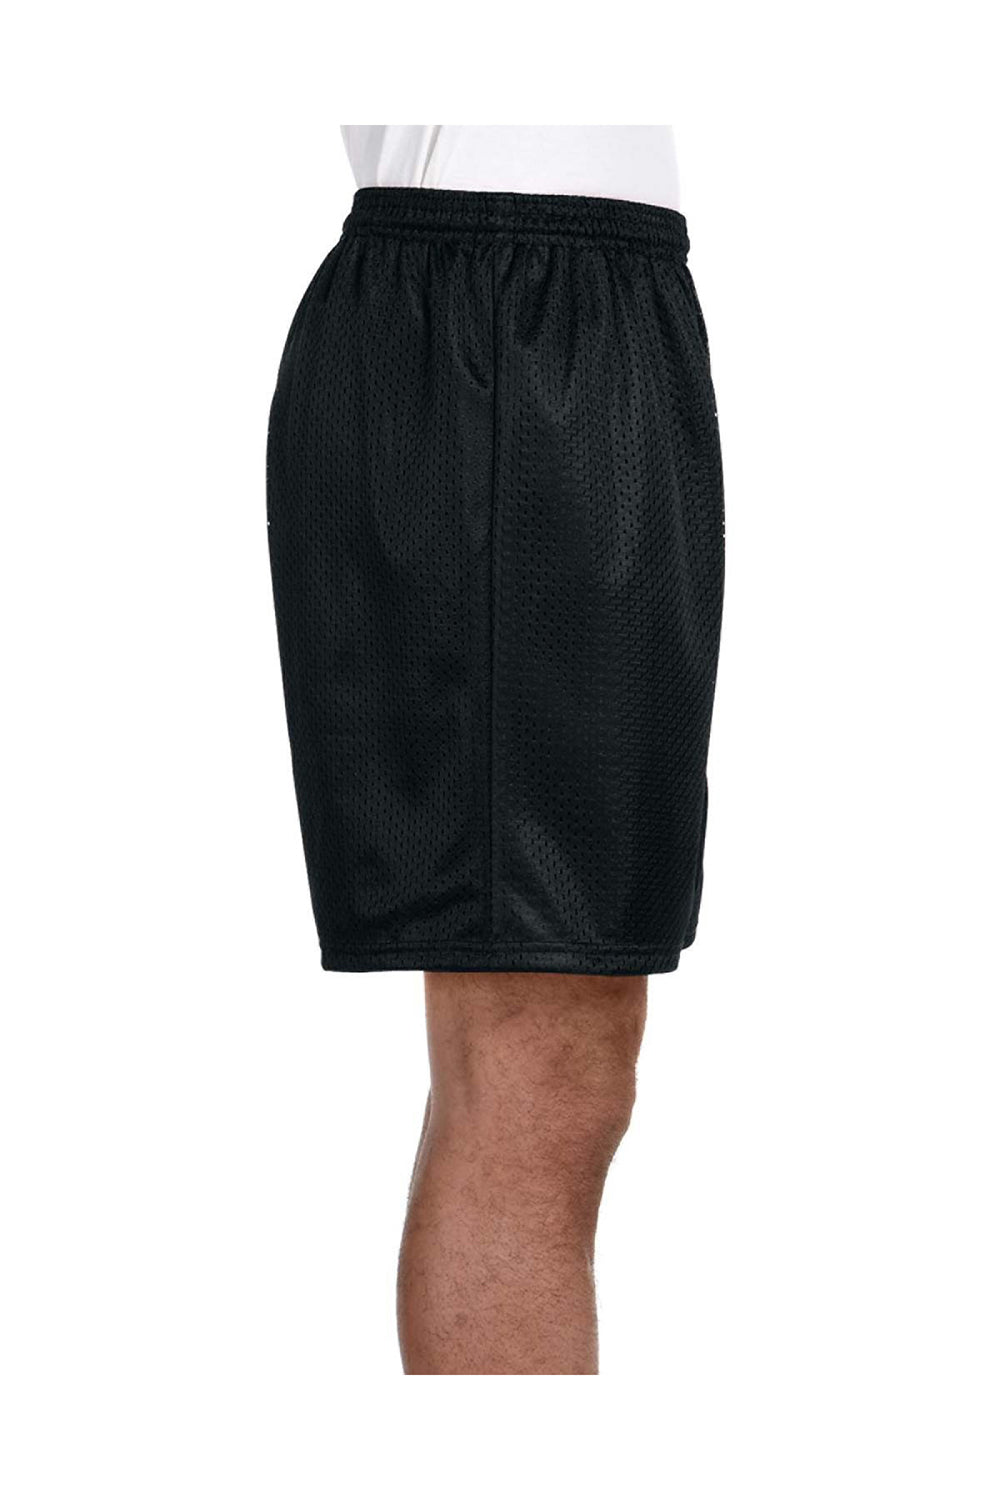 A4 N5293 Mens Moisture Wicking Mesh Shorts Black Model Side